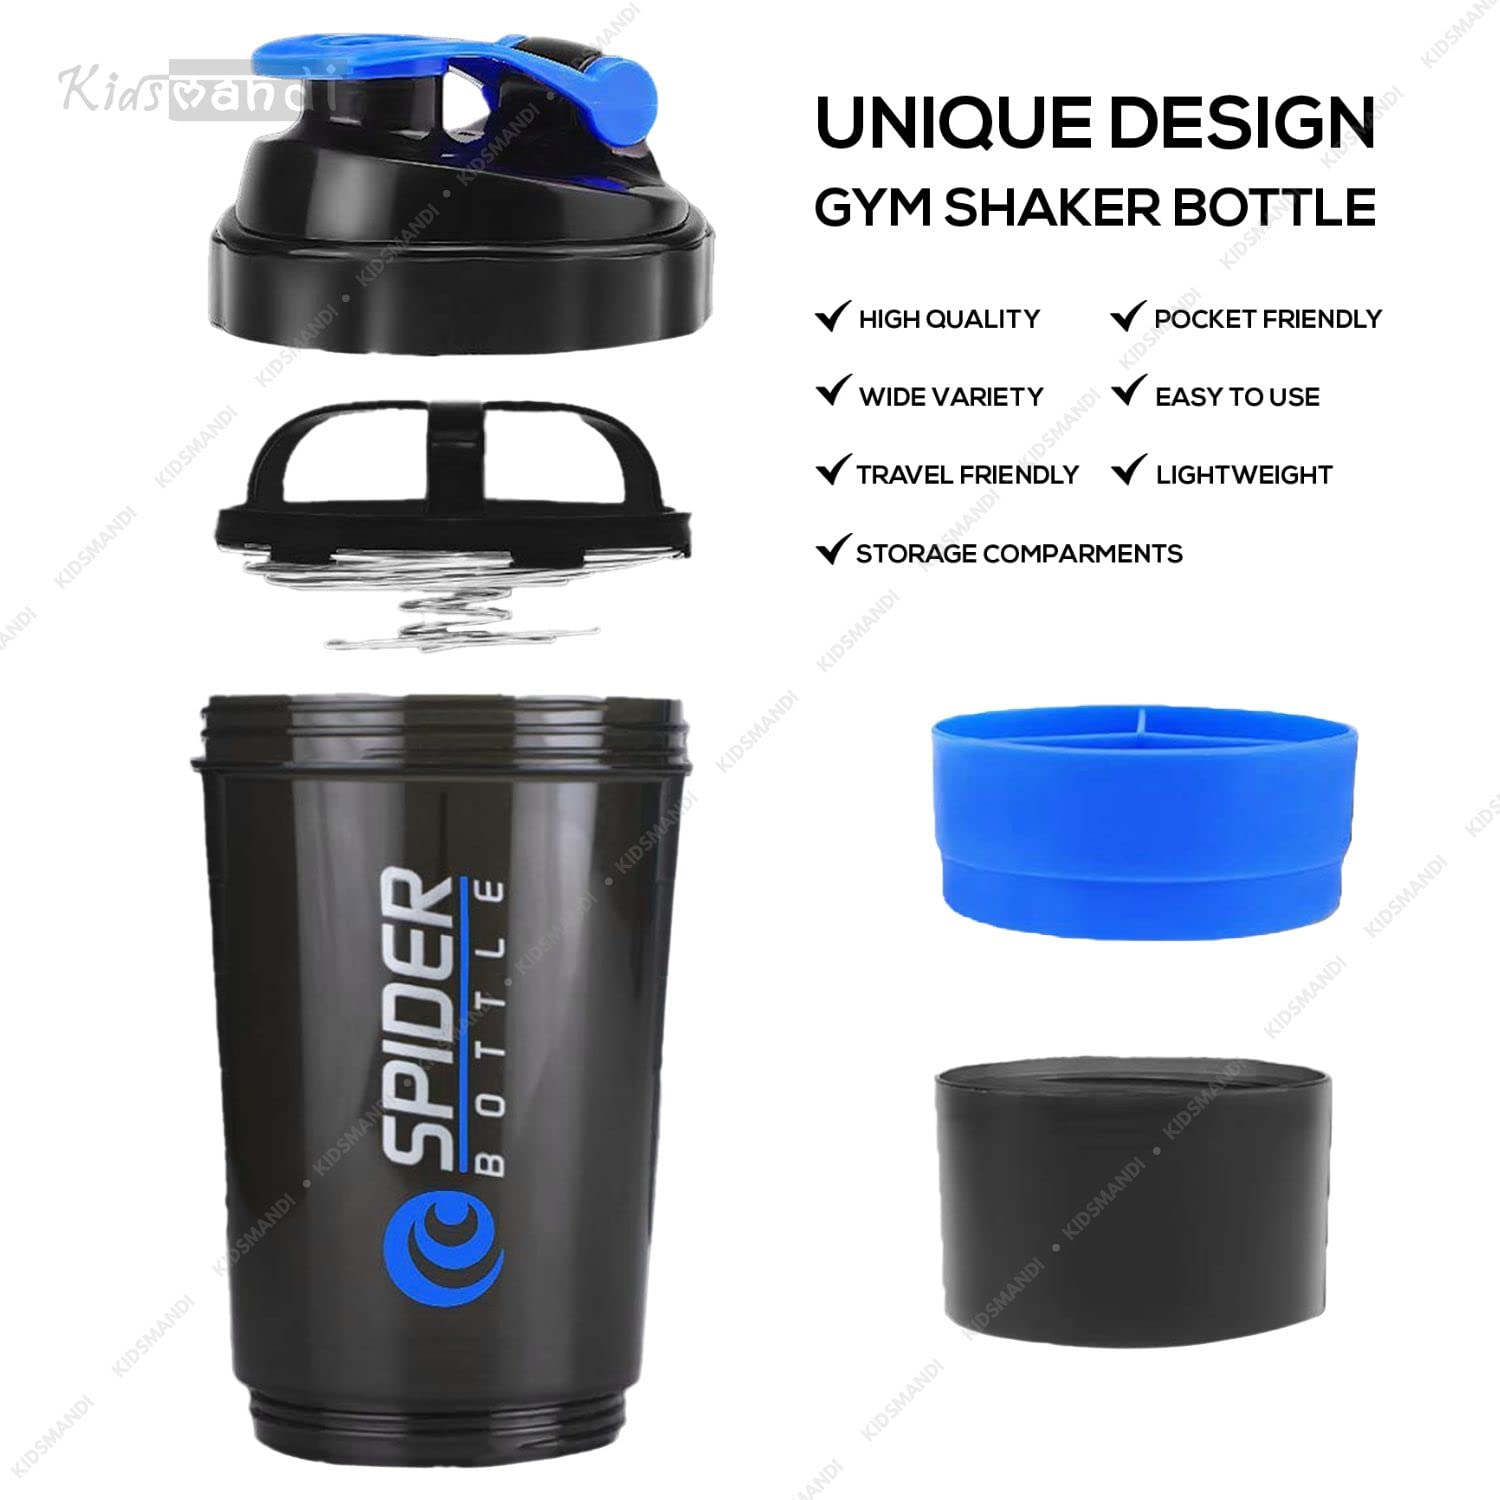 Kids Mandi SISQ gym spider shaker bottle 500ml - BPA free.